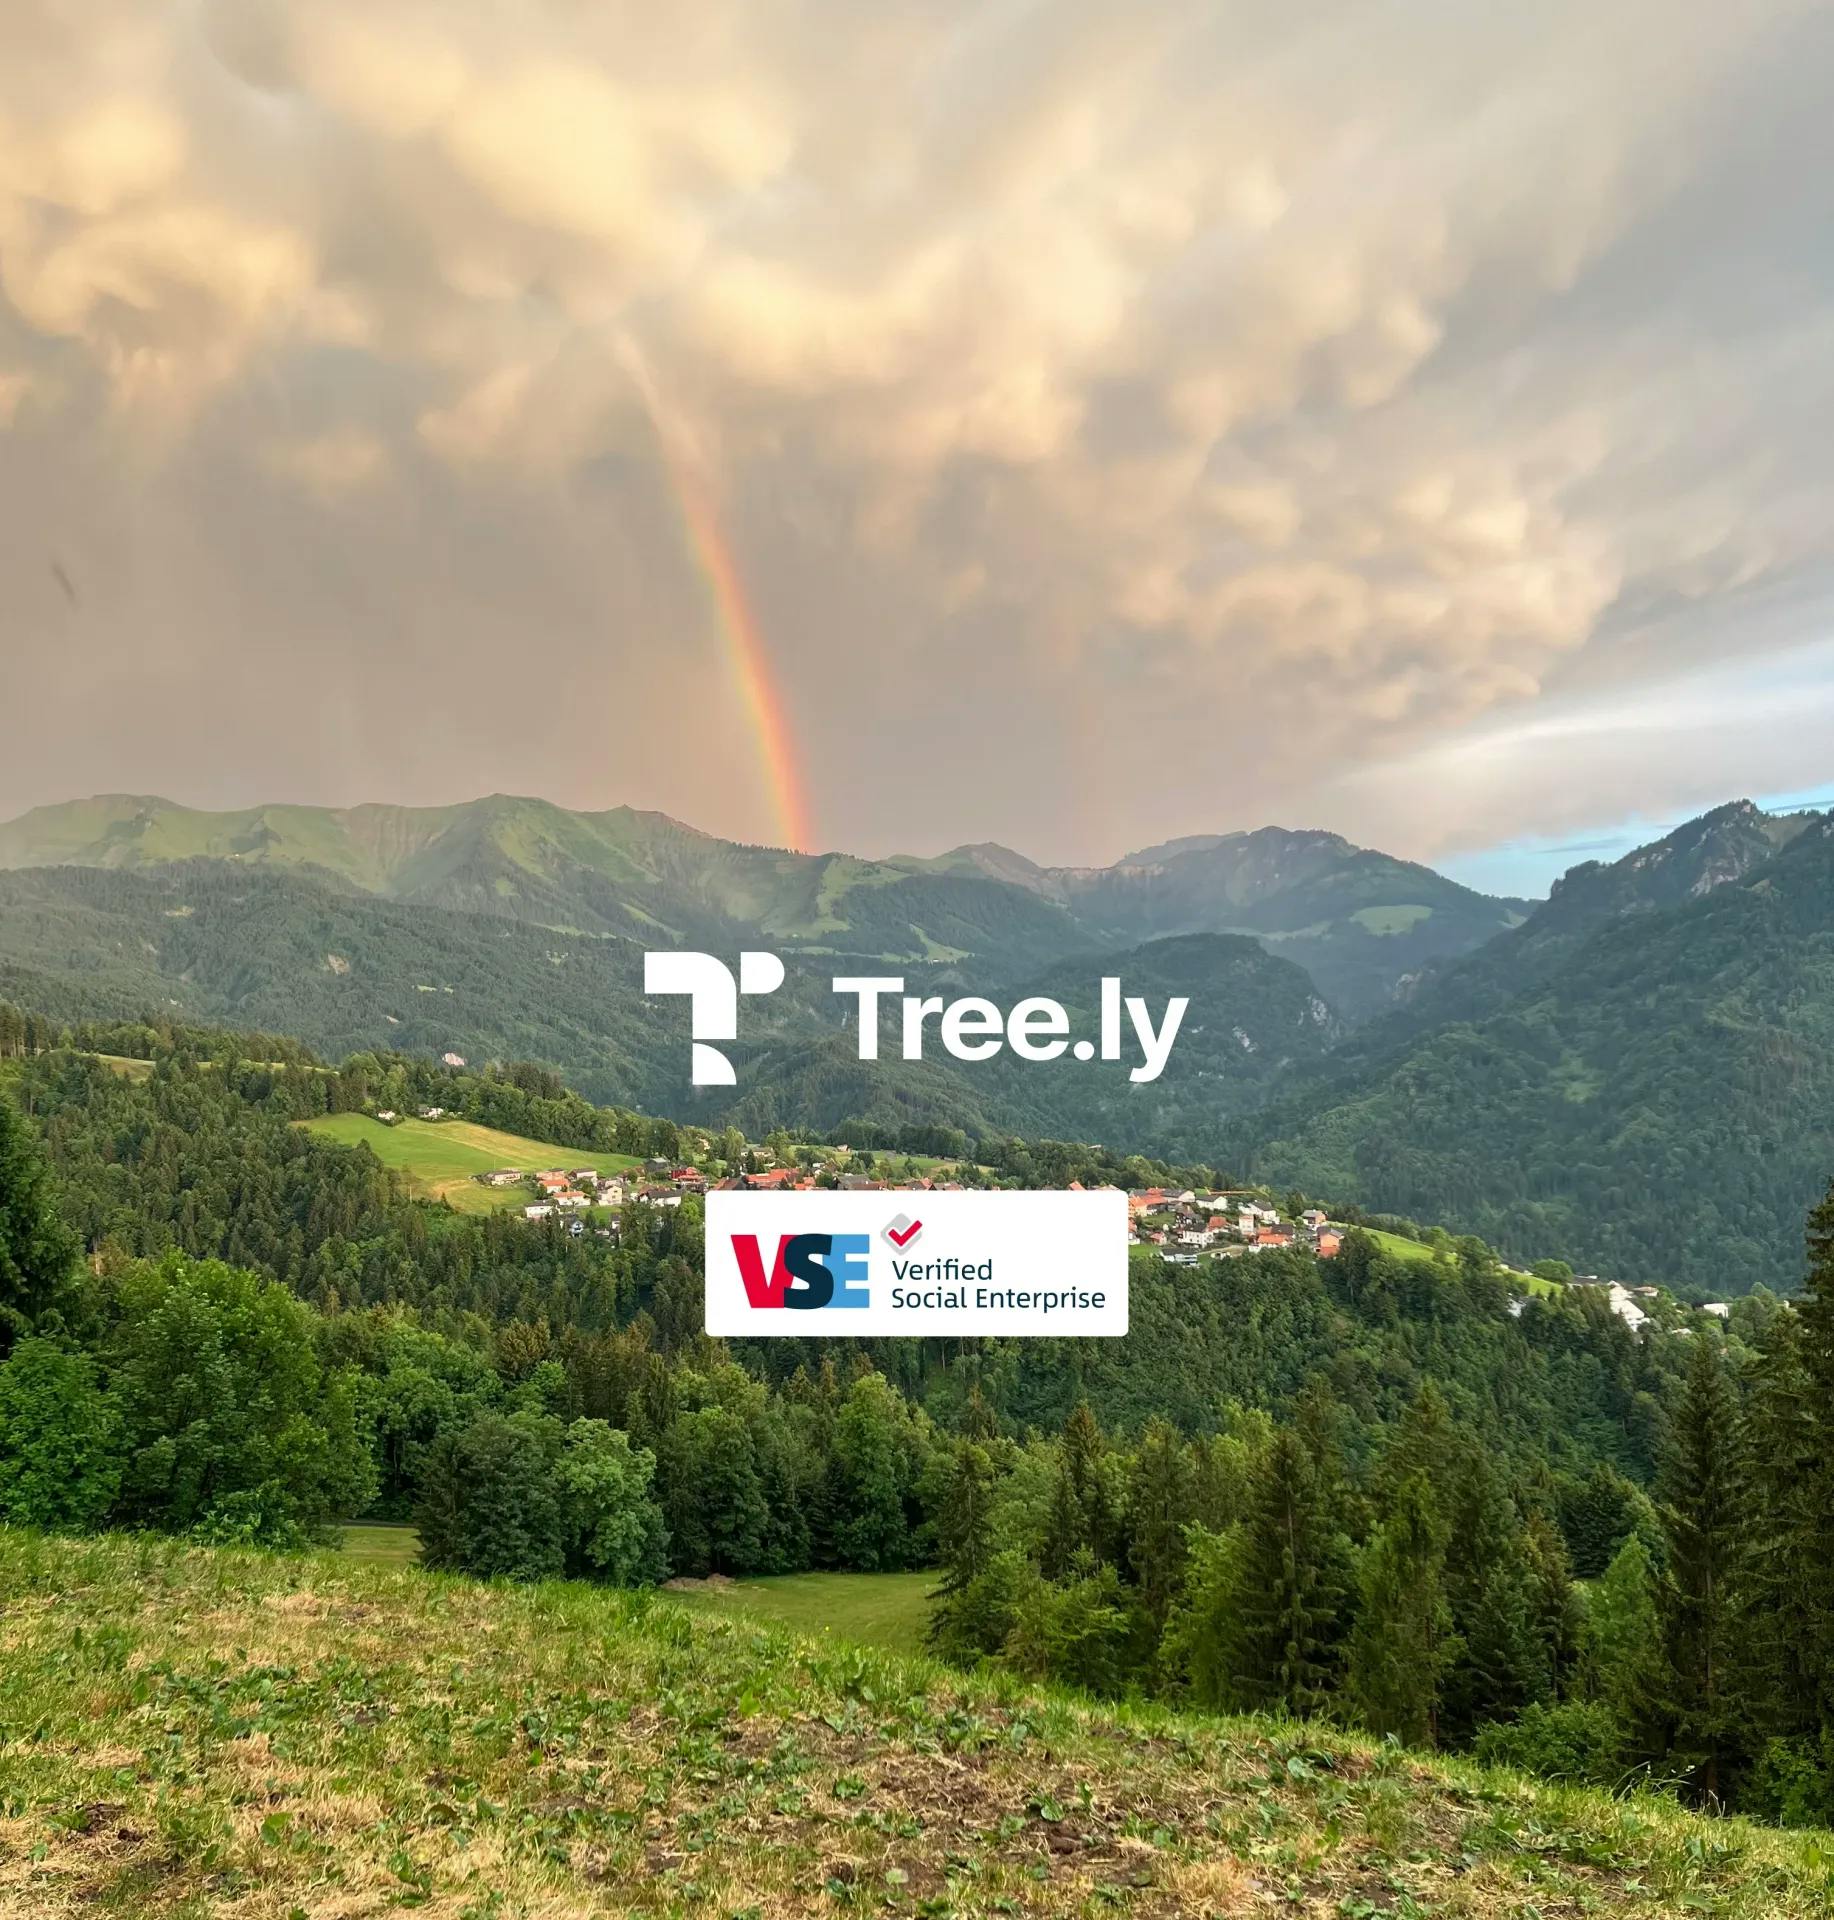 Tree.ly Logo and Verified Social Enterprise Logo